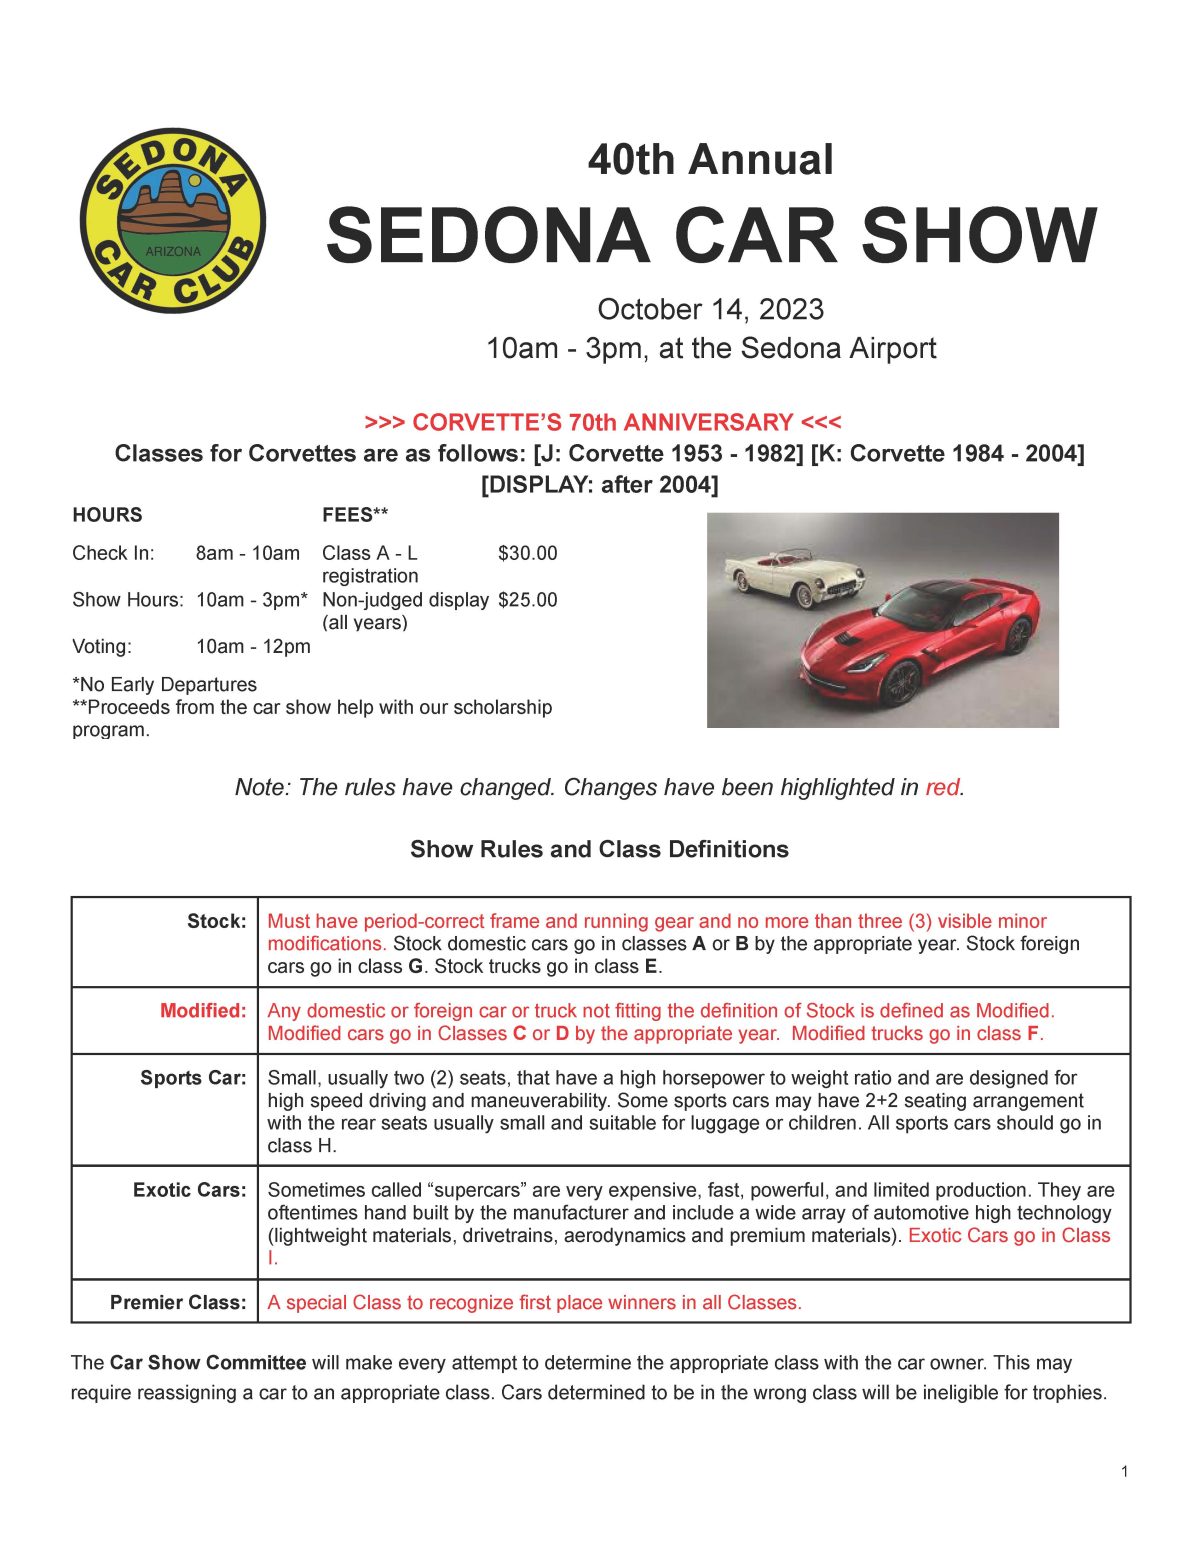 Sedona Car Show